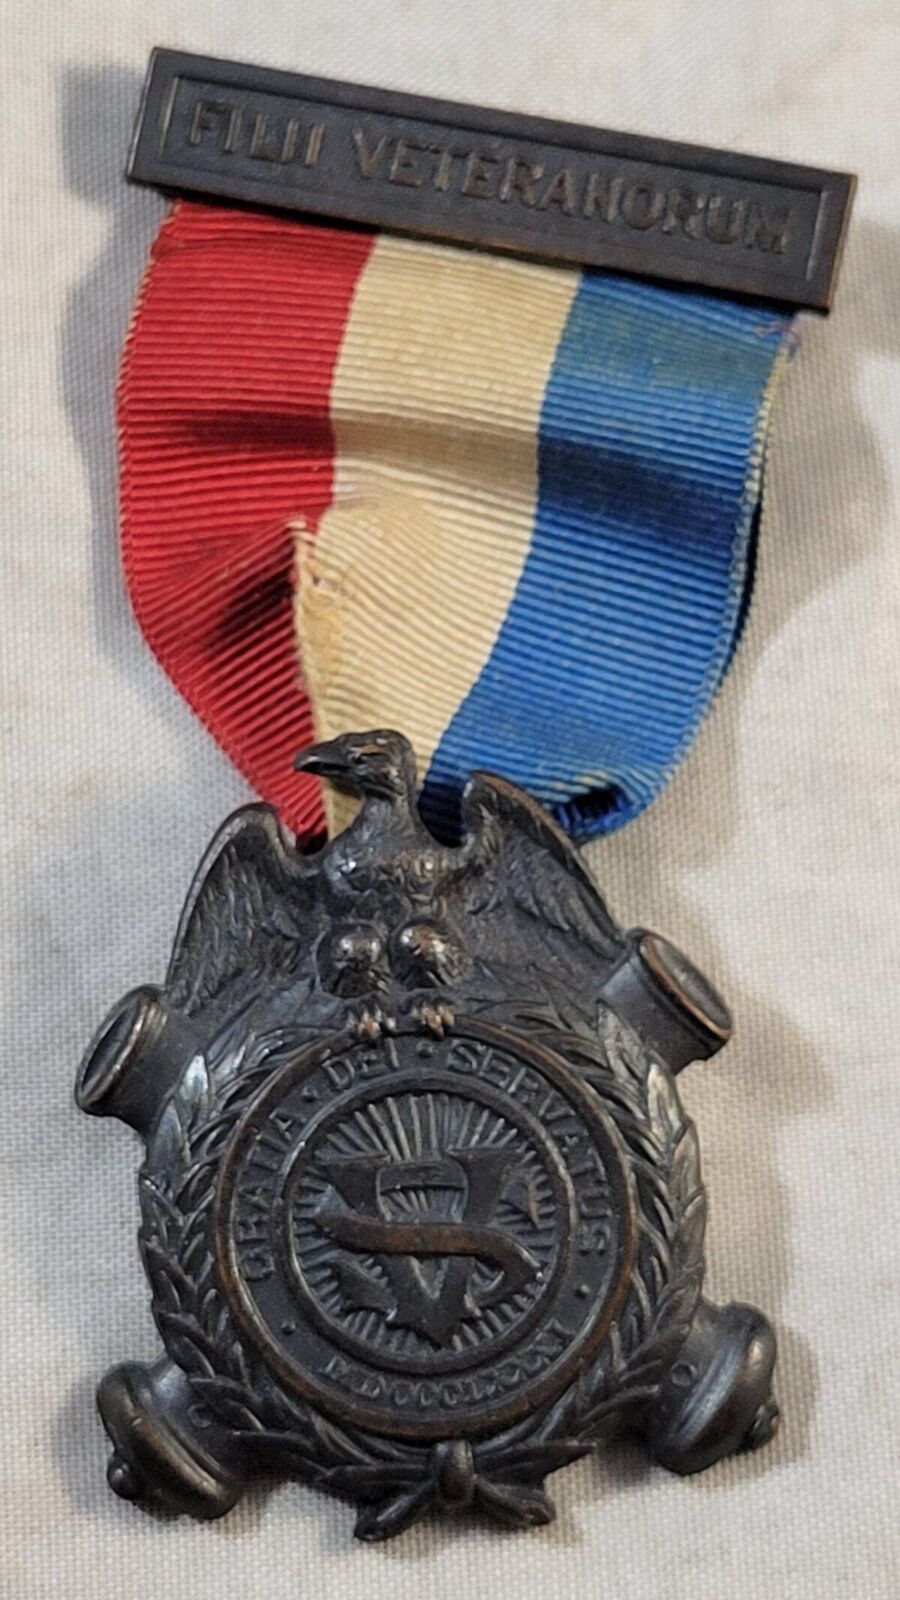 Vintage 1888 Civil War Sons of Union Veterans Medal Ribbon Bar